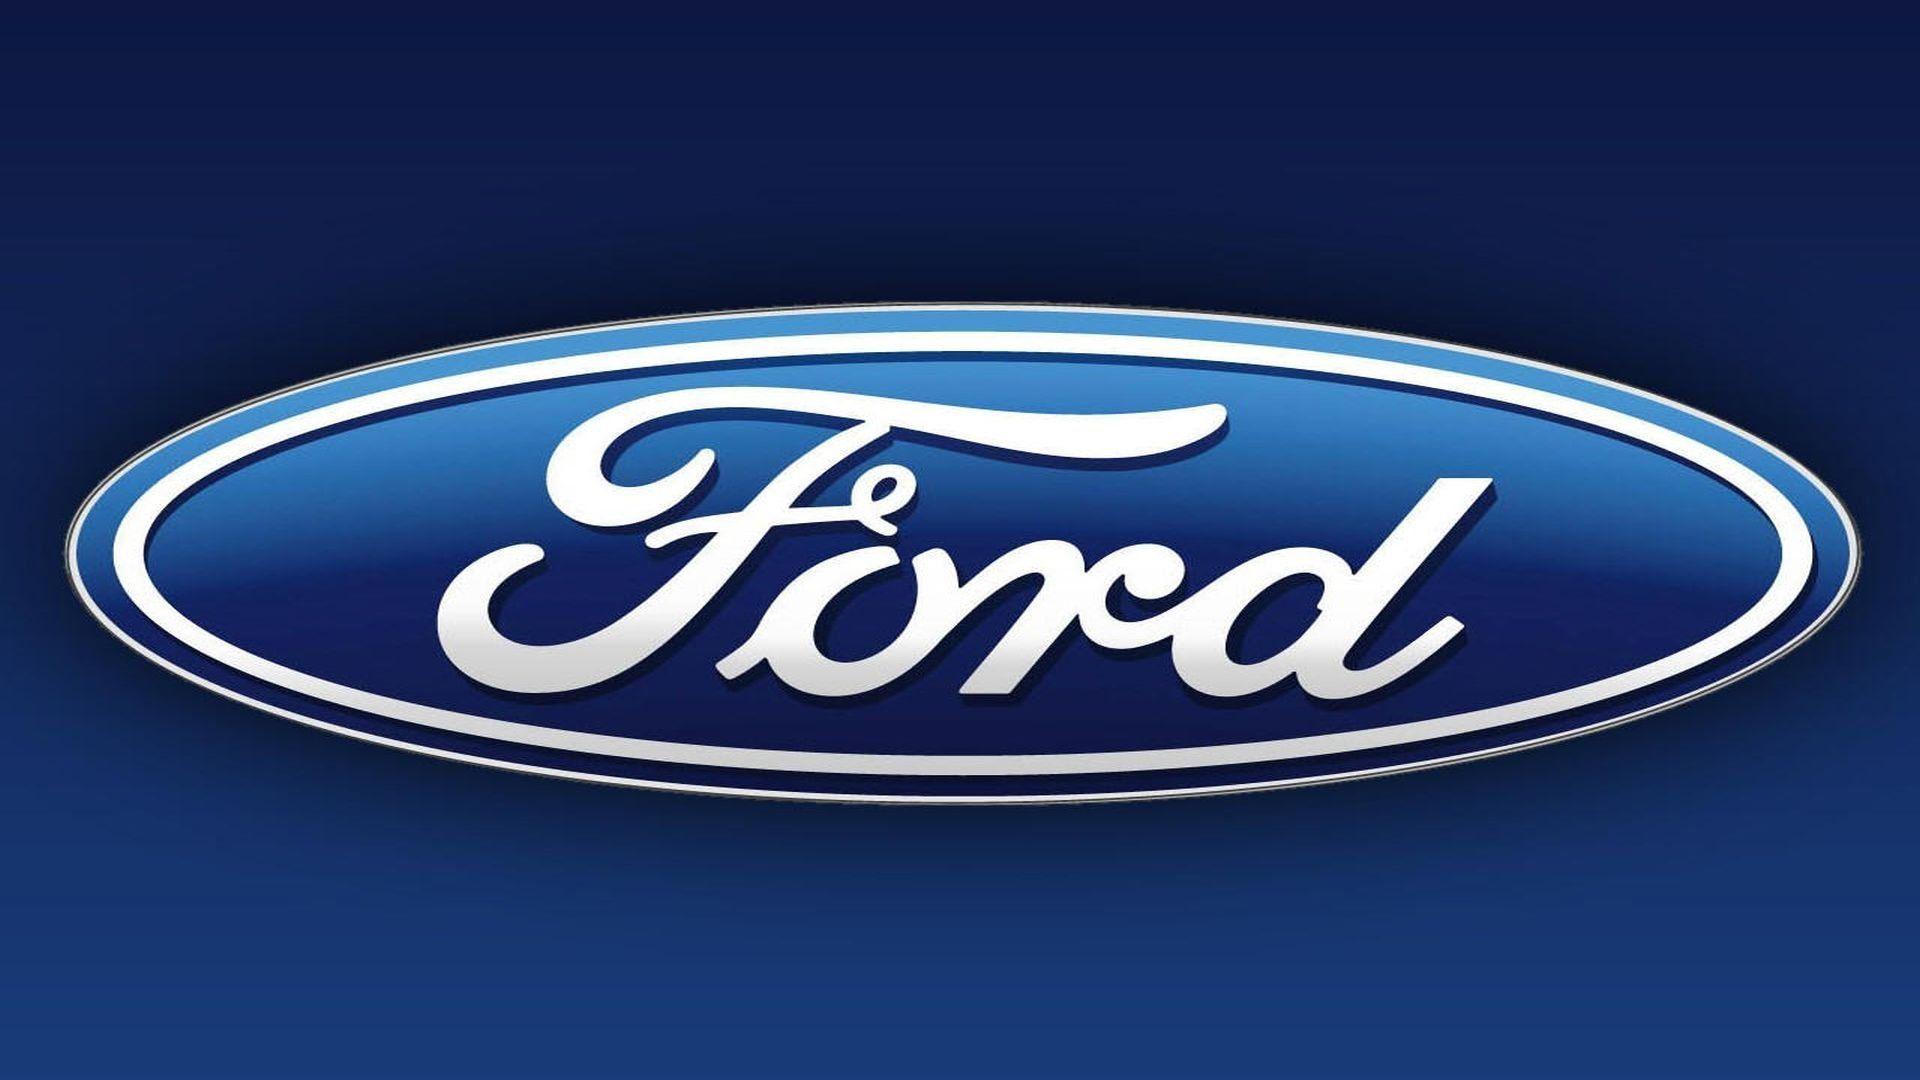 Ford F 150 Logo Wallpaper